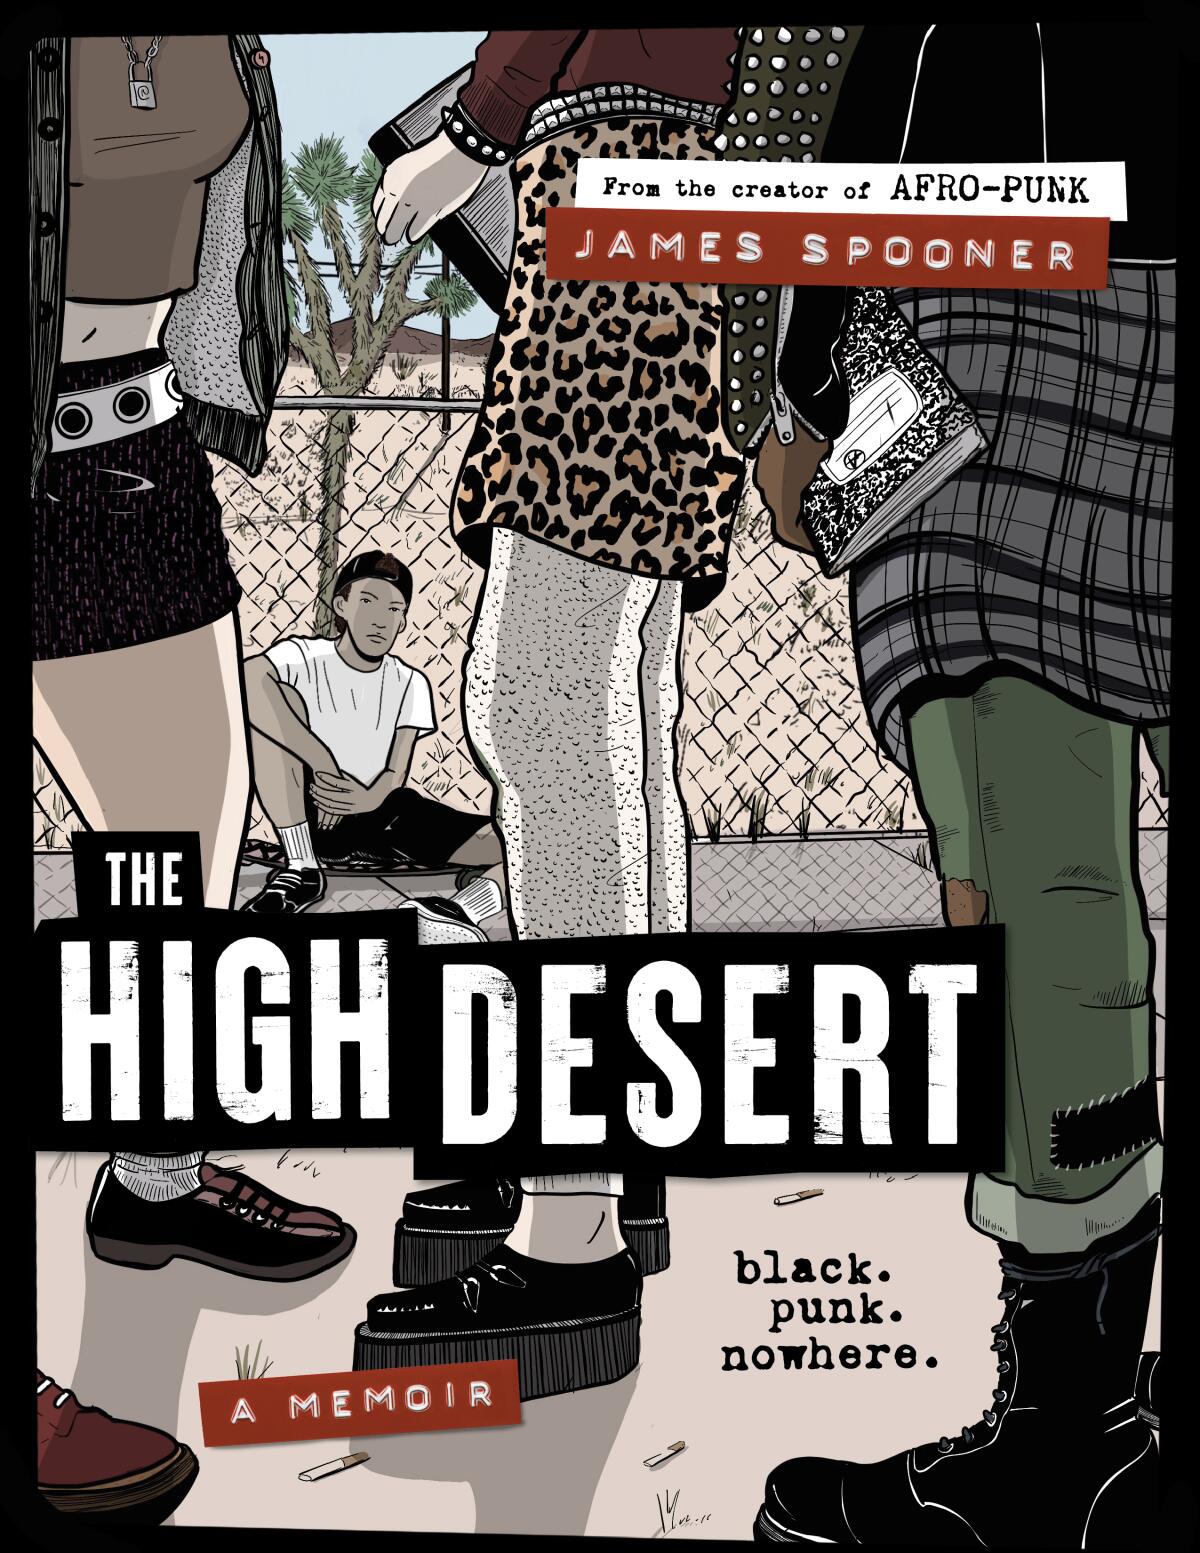 "The High Desert: A Memoir" by James Spooner